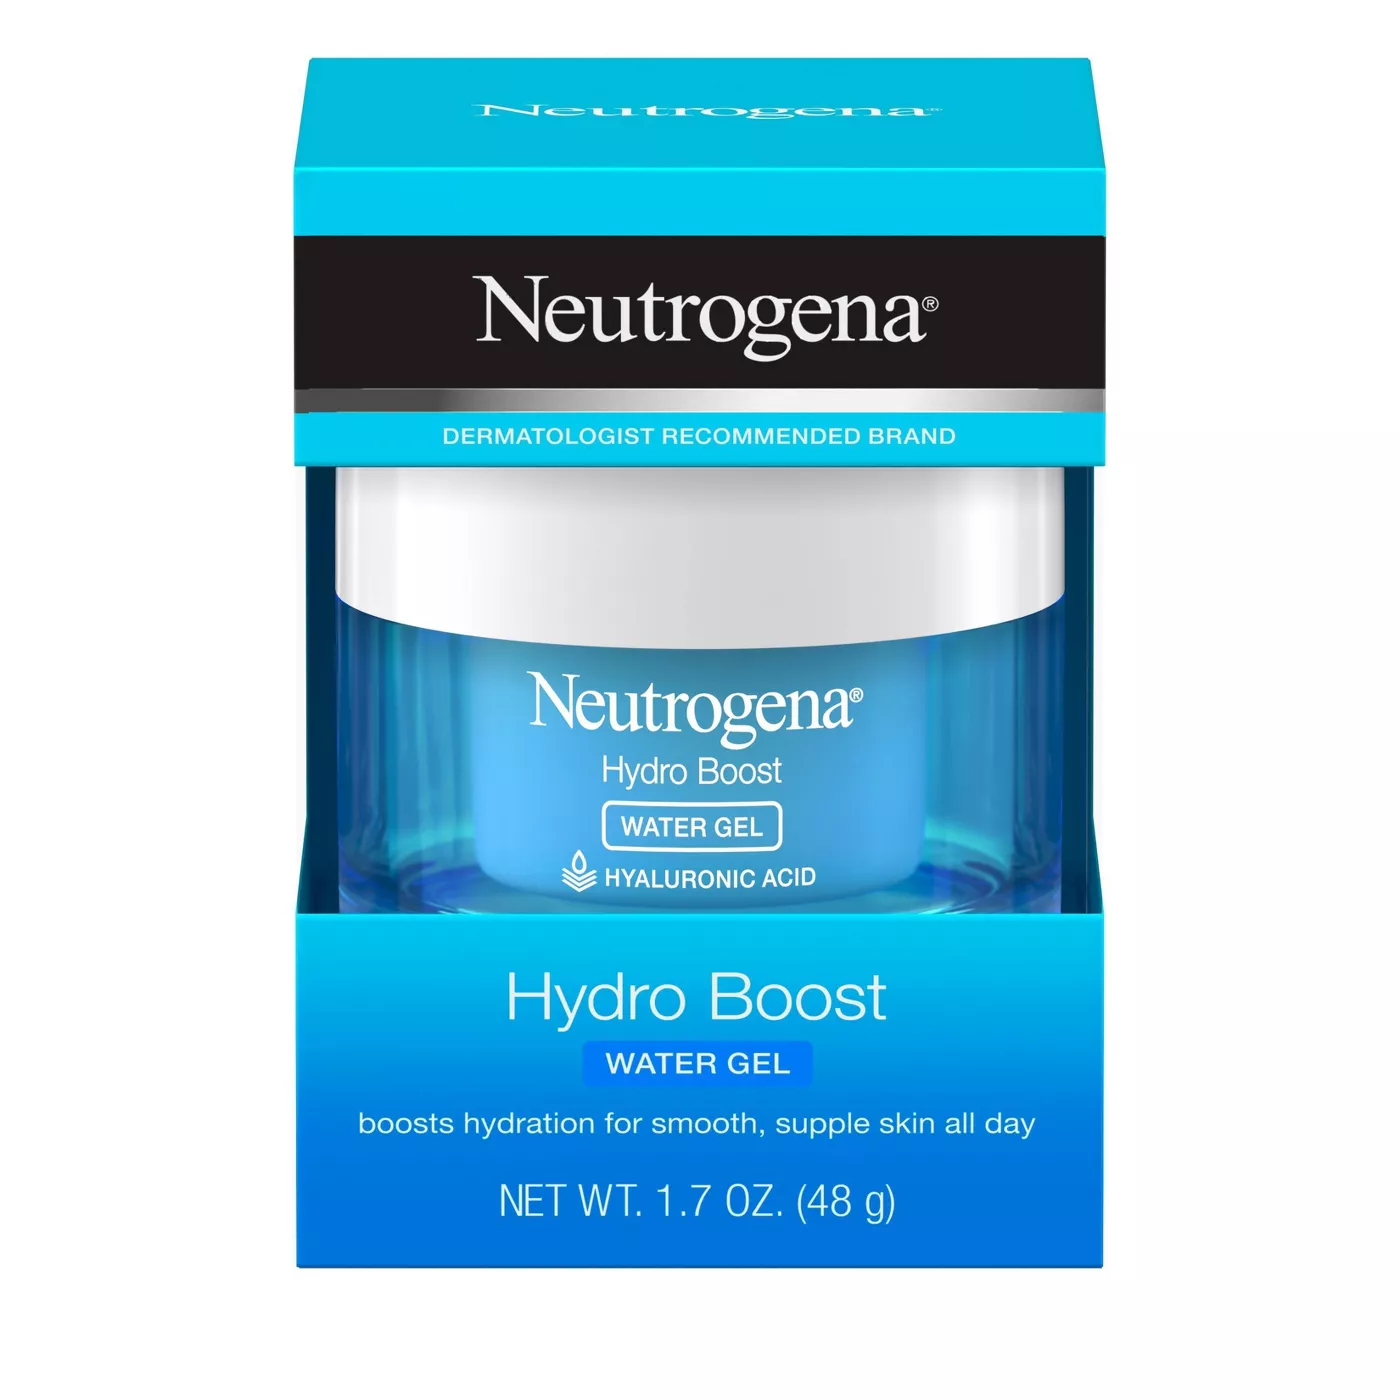 Neutrogena Hydro Boost Hydrating Water Gel Face Moisturizer with Hyaluronic Acid - 1.7 fl oz - image 1 of 22